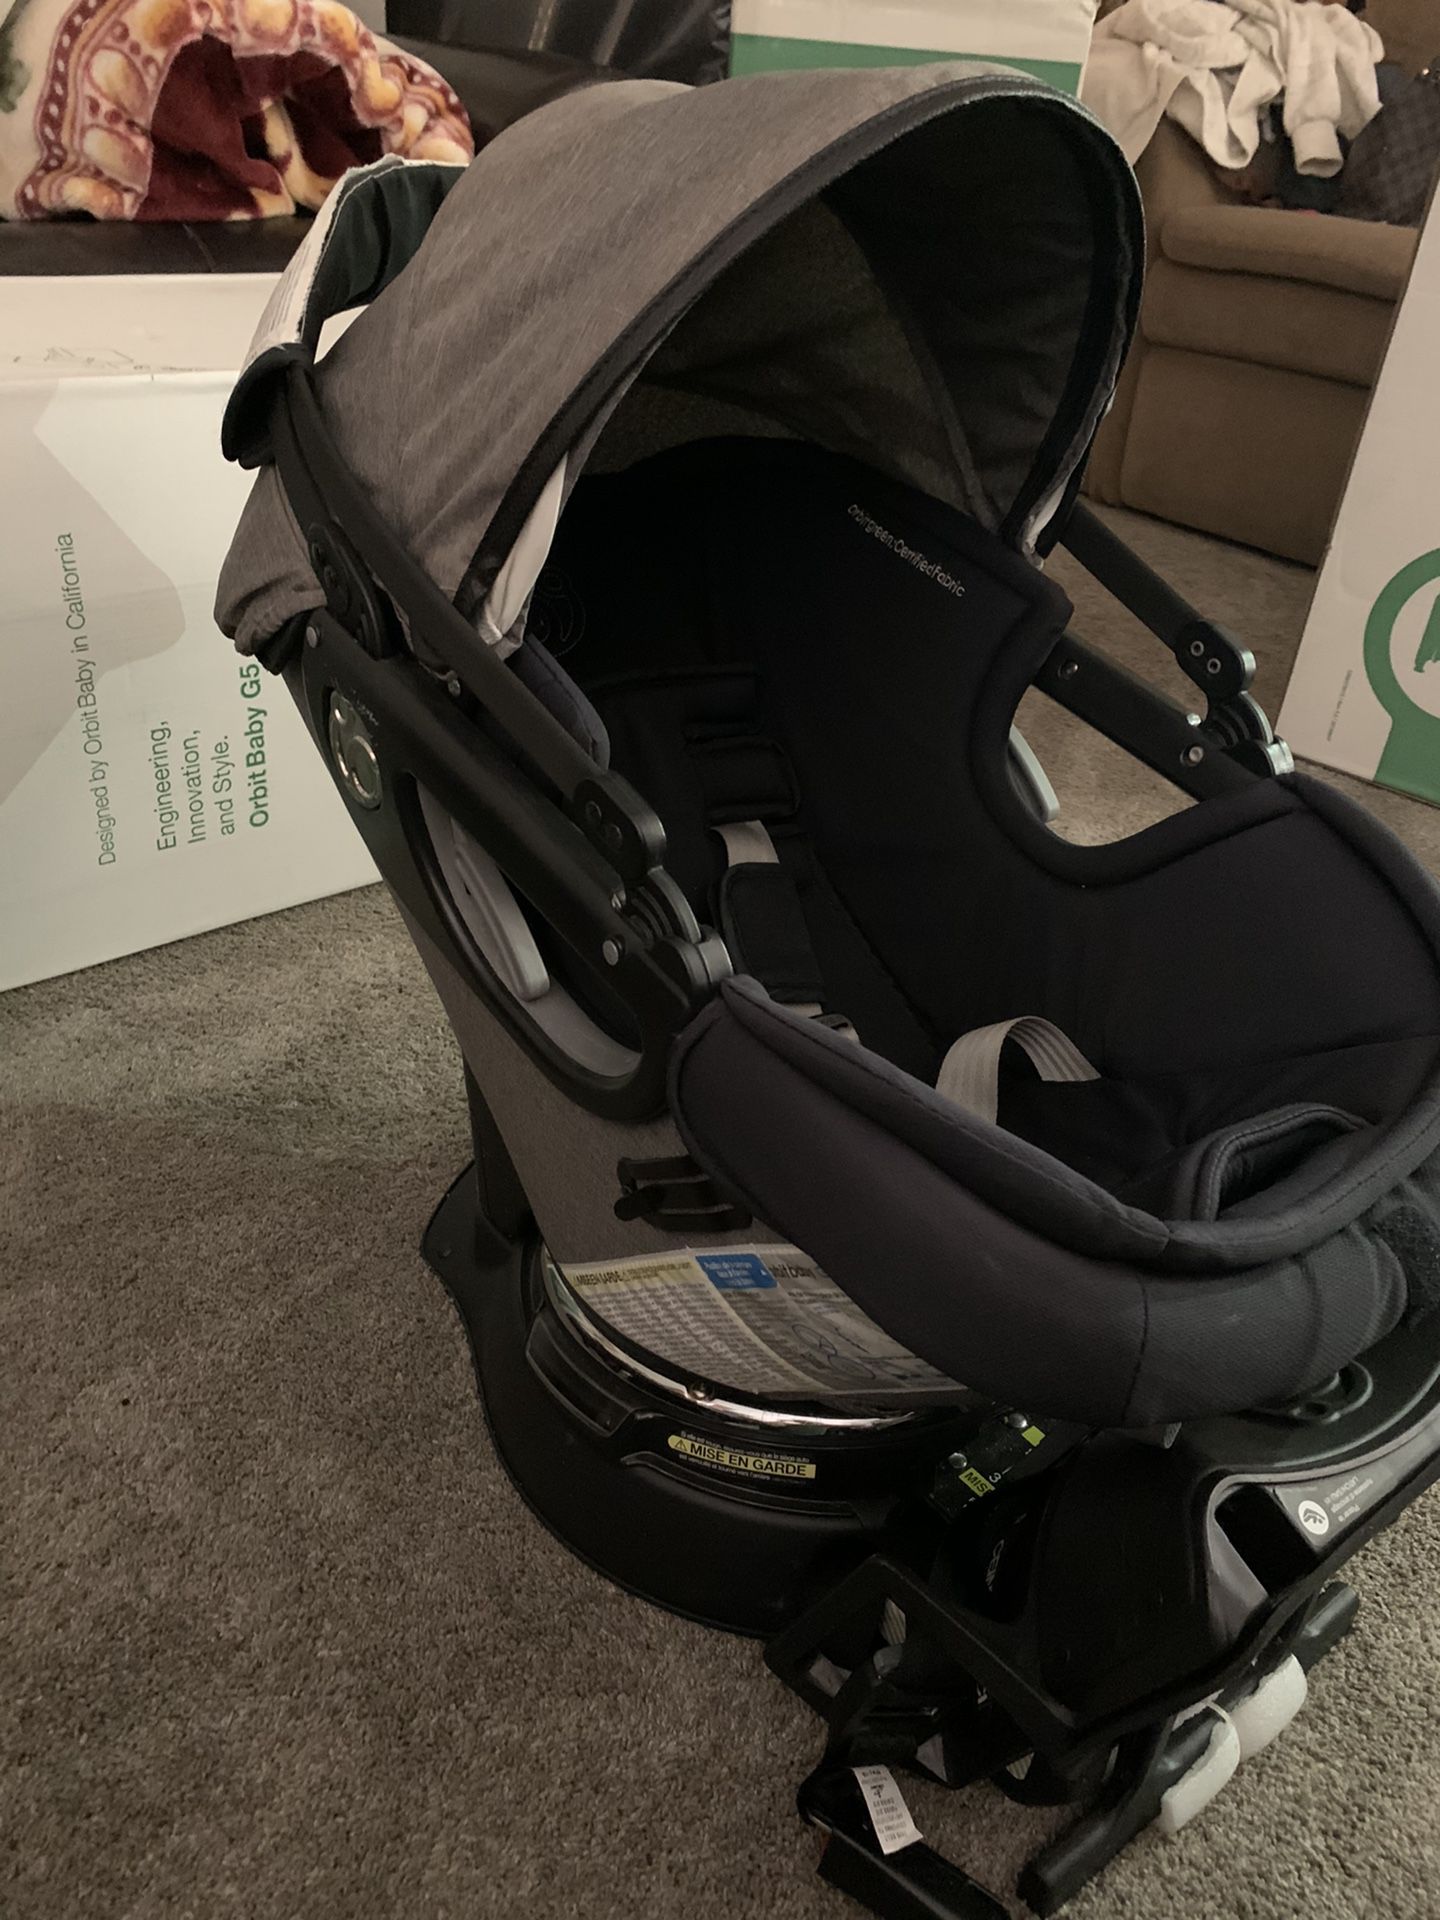 Orbit baby g3 car seat